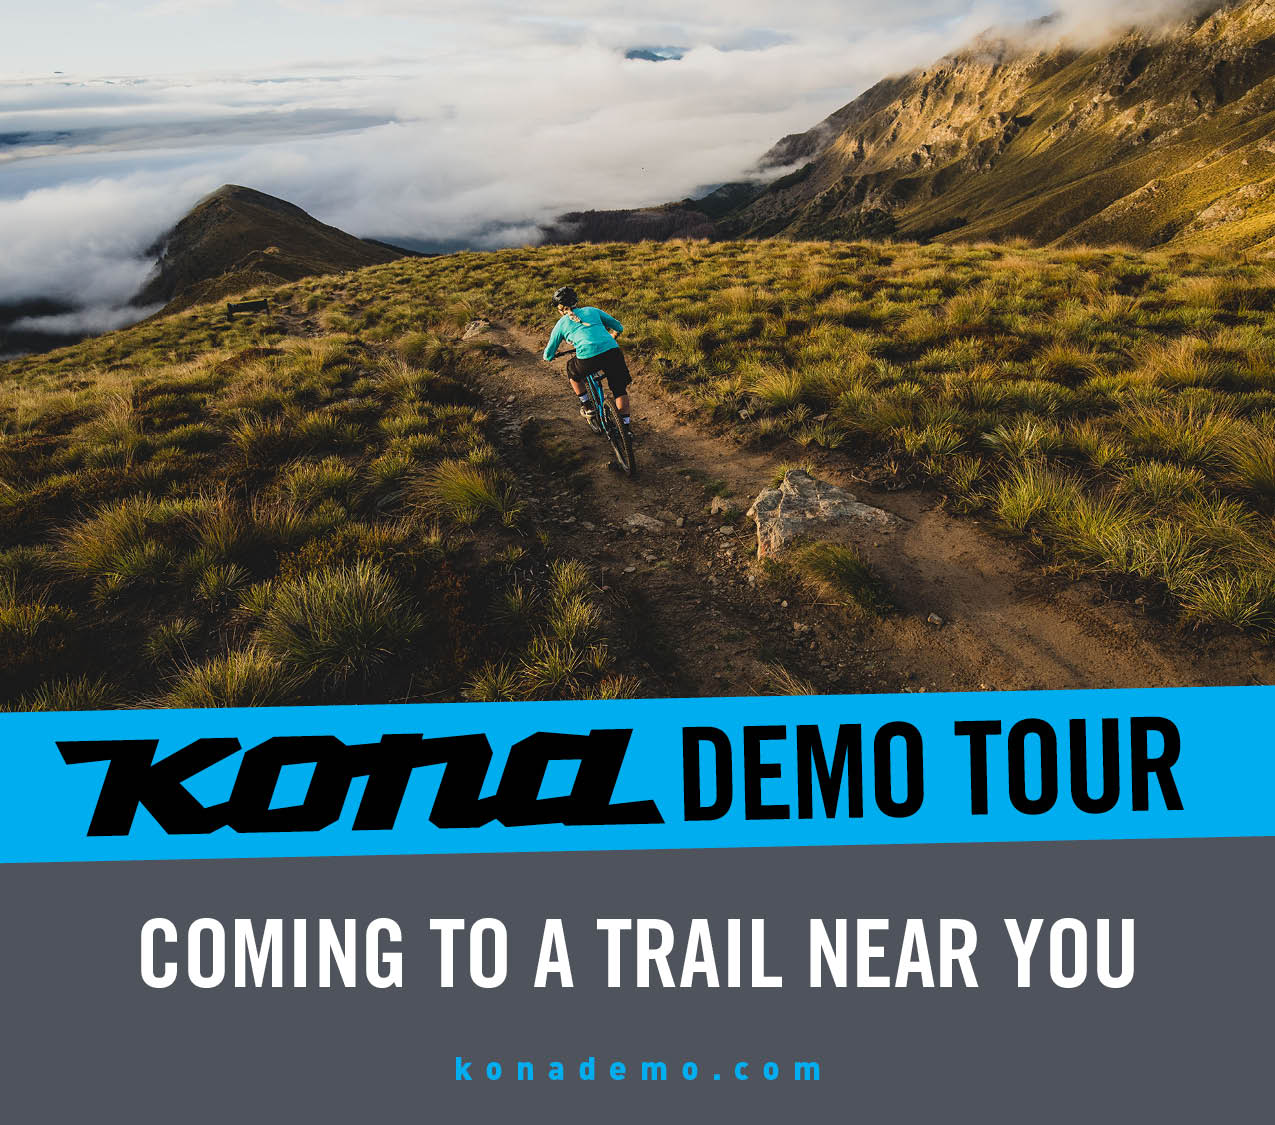 California and Oregon, the KONA Demo Tour is headed your way! | KONA COG